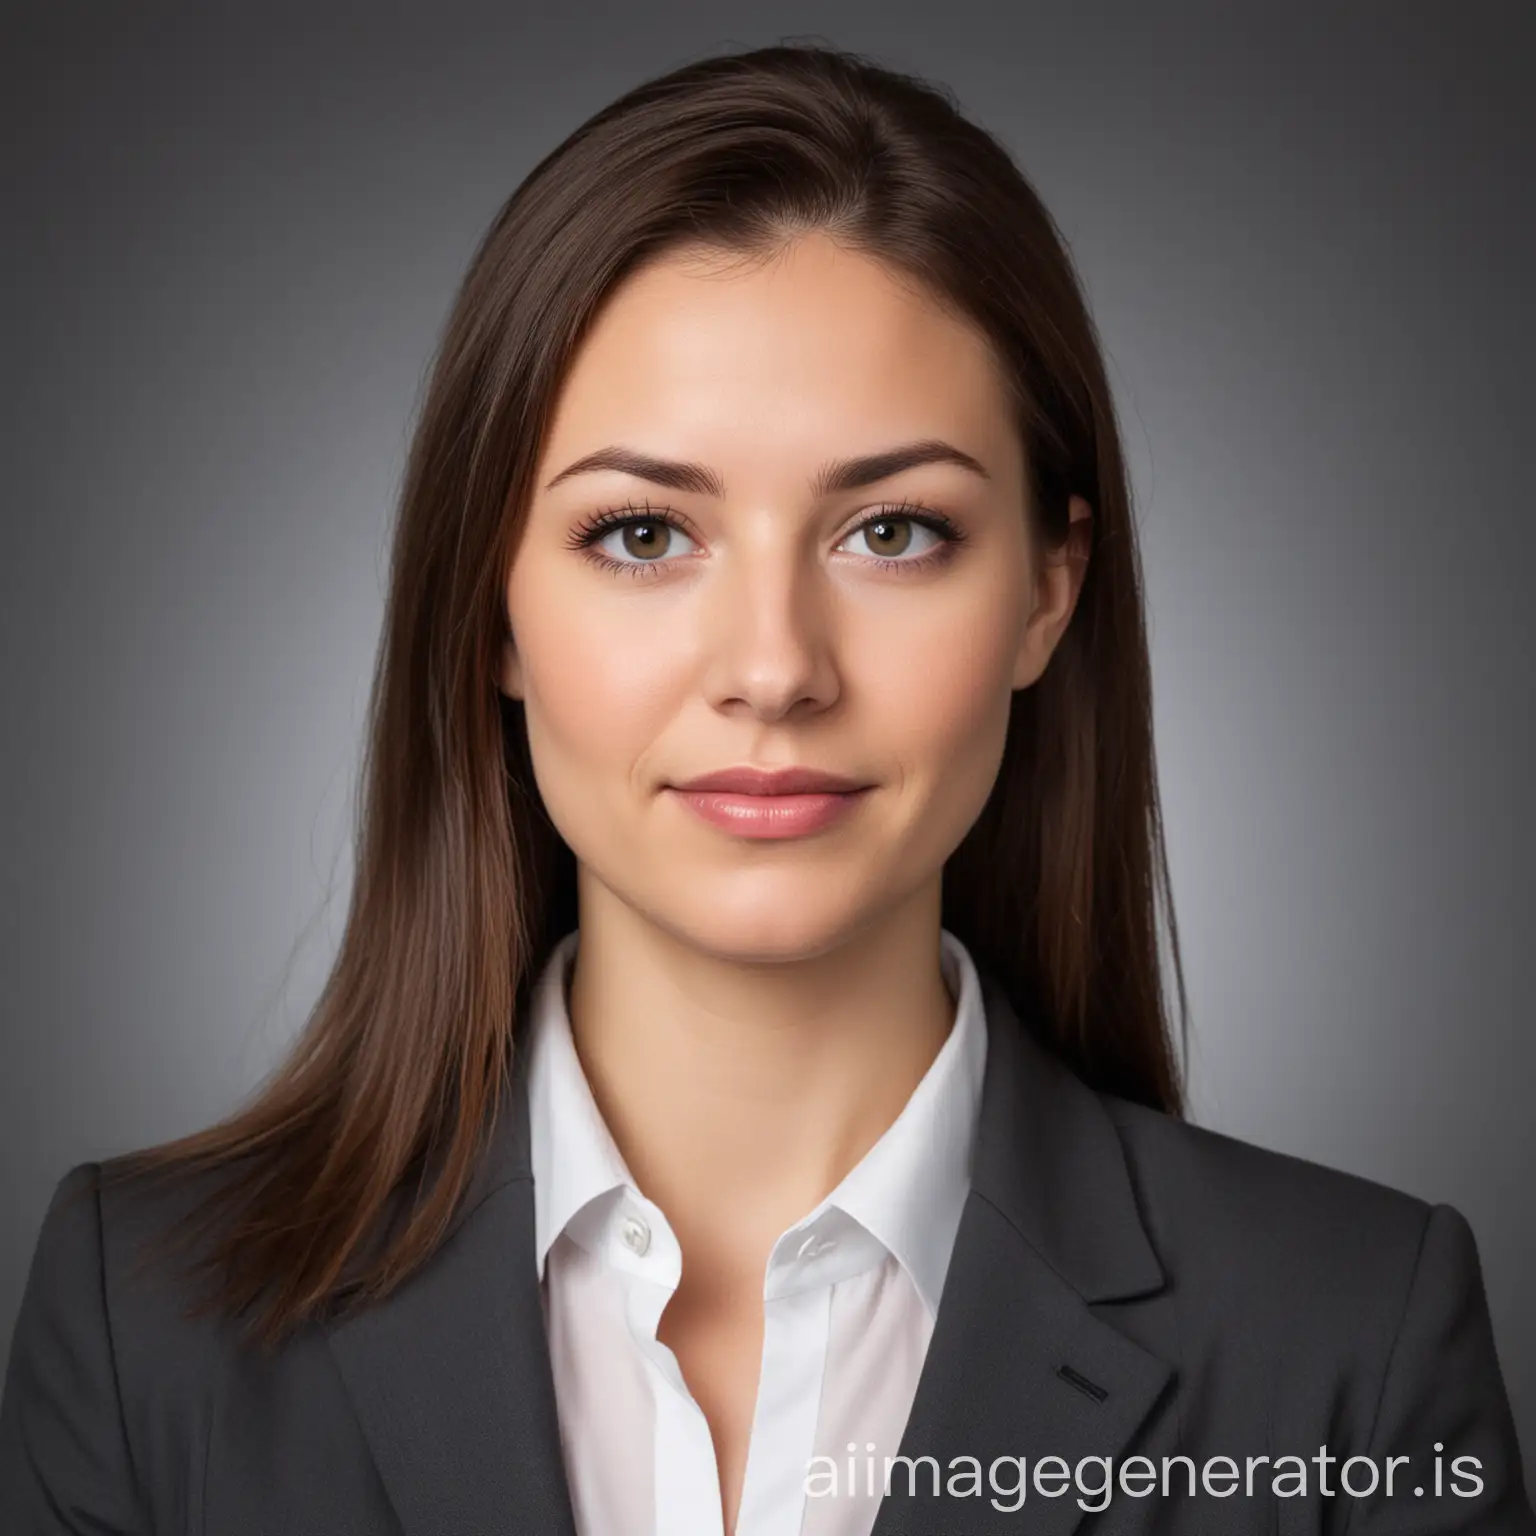 Caucasian-Female-Office-Worker-ID-Photo-Portrait